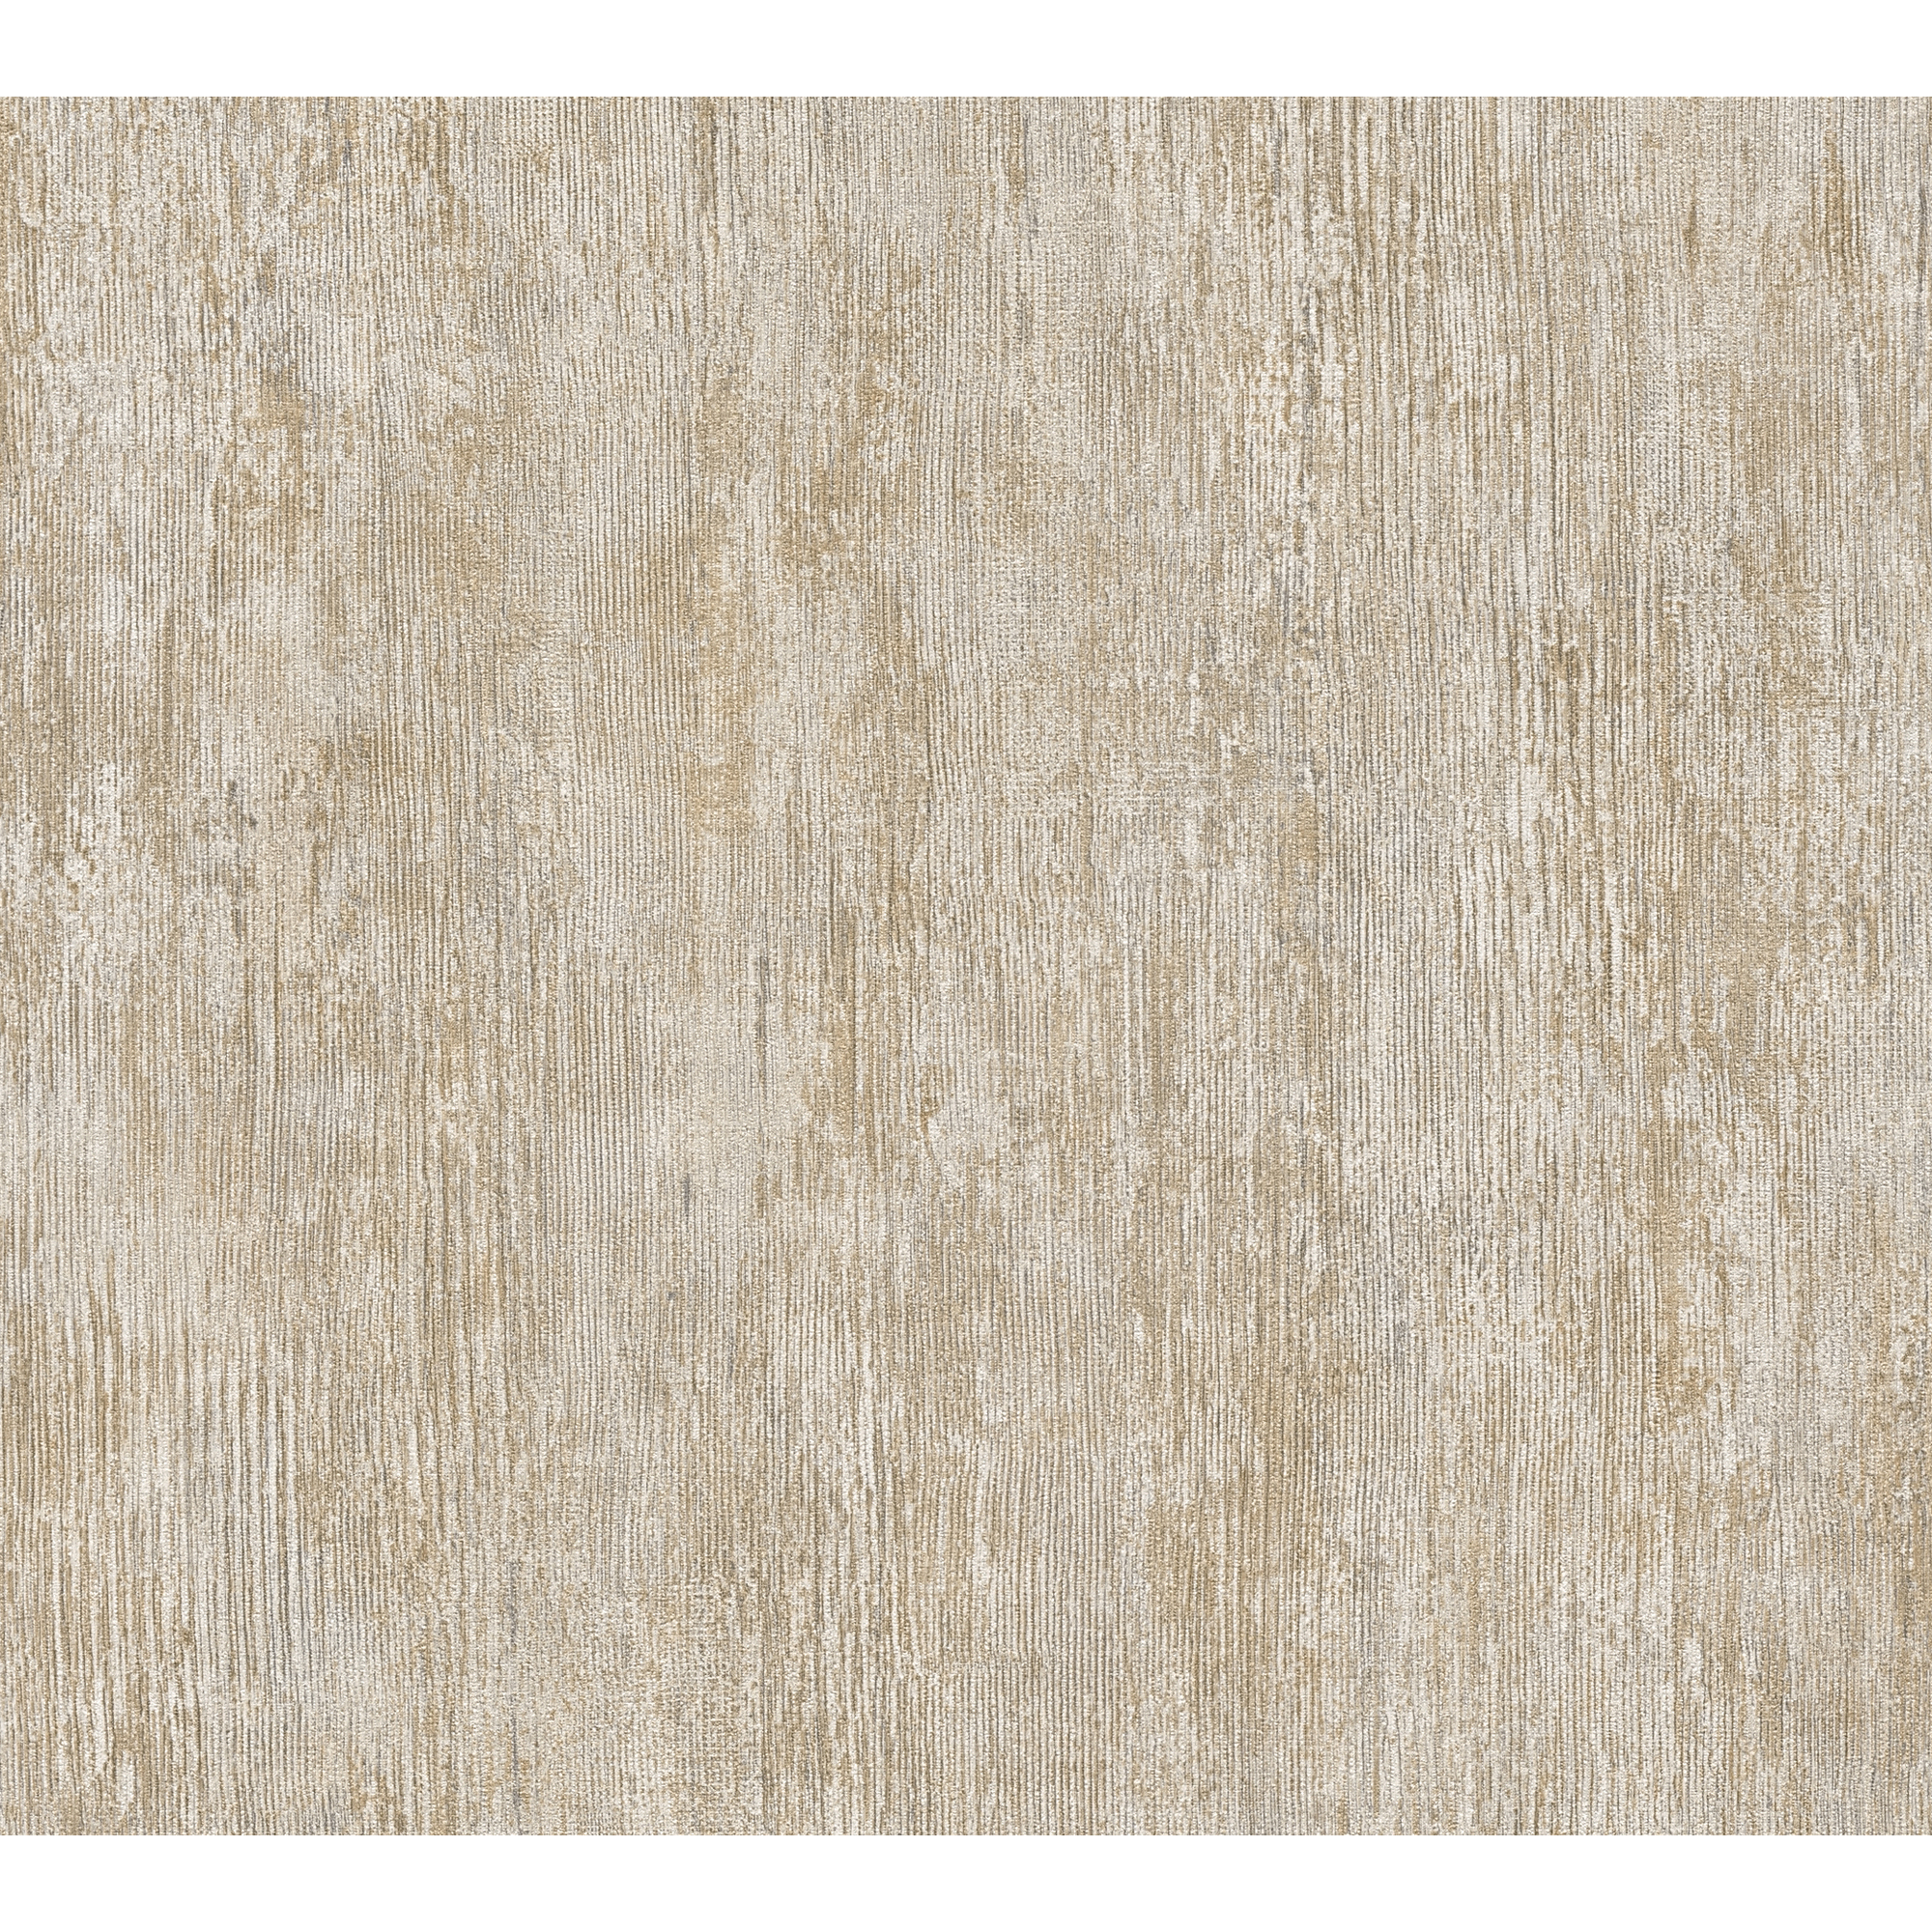 Vliestapete 'Industrial' Rillen beige/grau 53 x 1005 cm + product picture